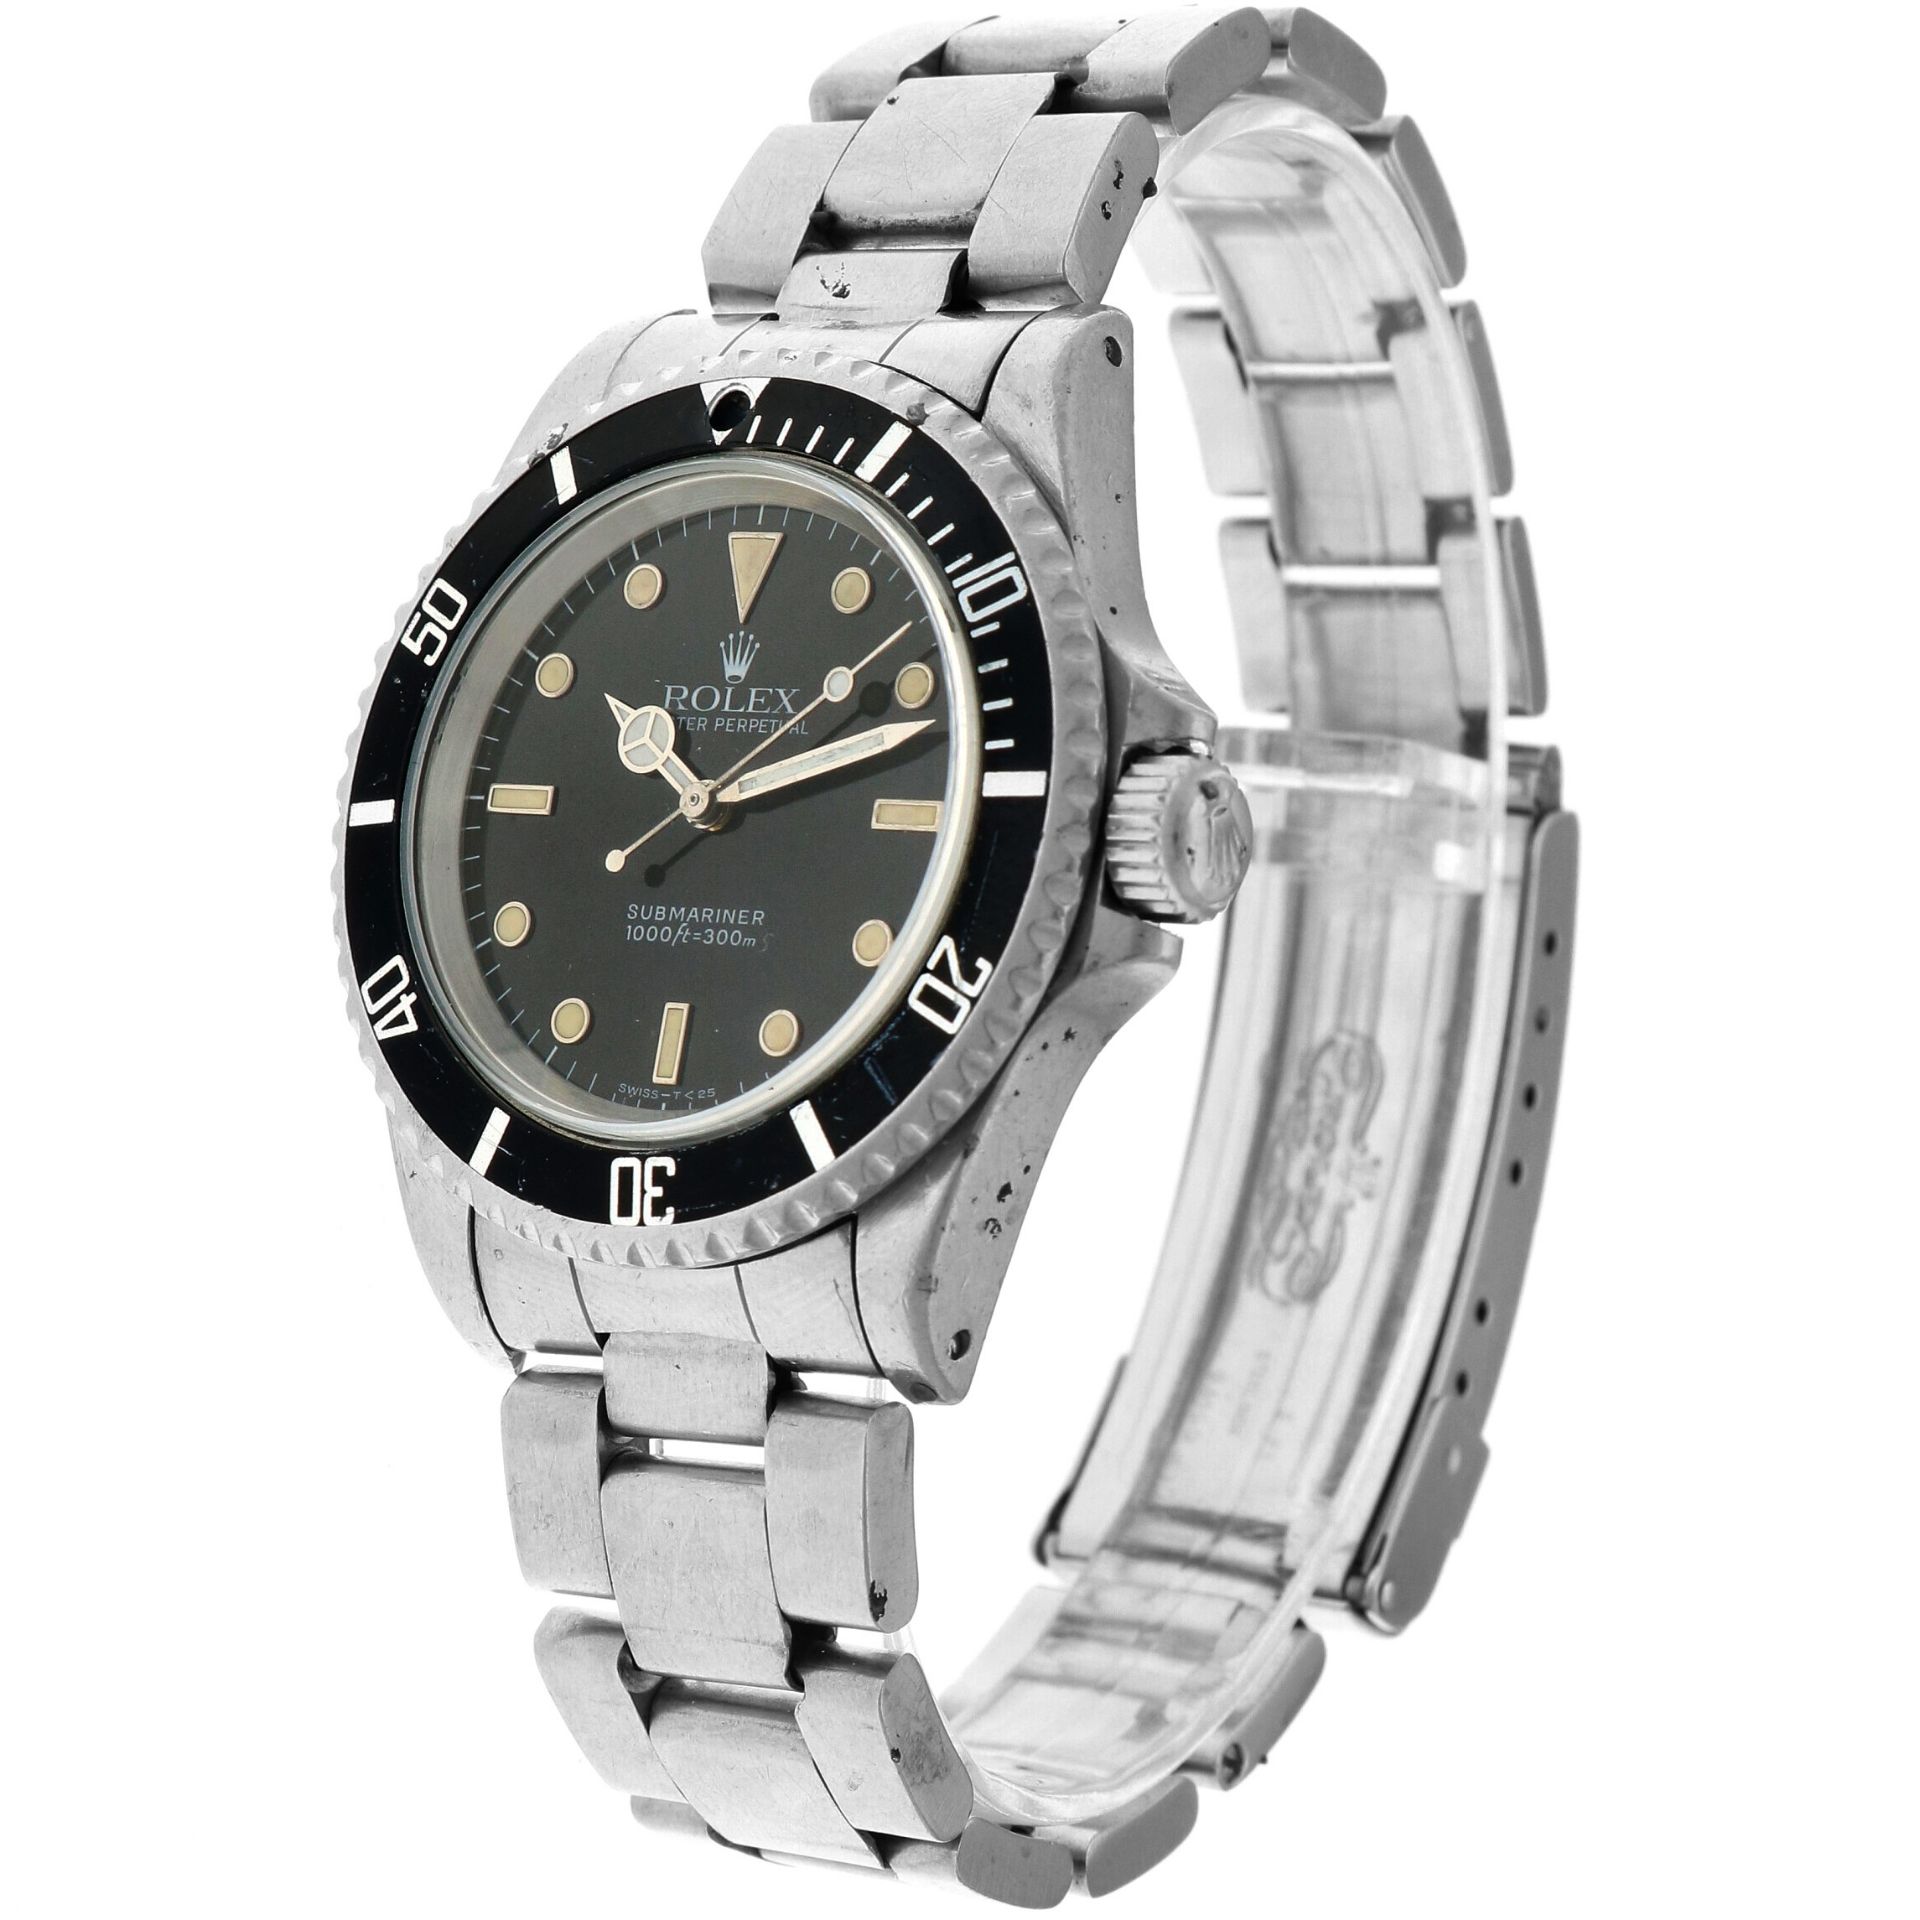 No Reserve - Rolex Submariner No Date 14060 - Men's watch - 1991. - Image 2 of 5